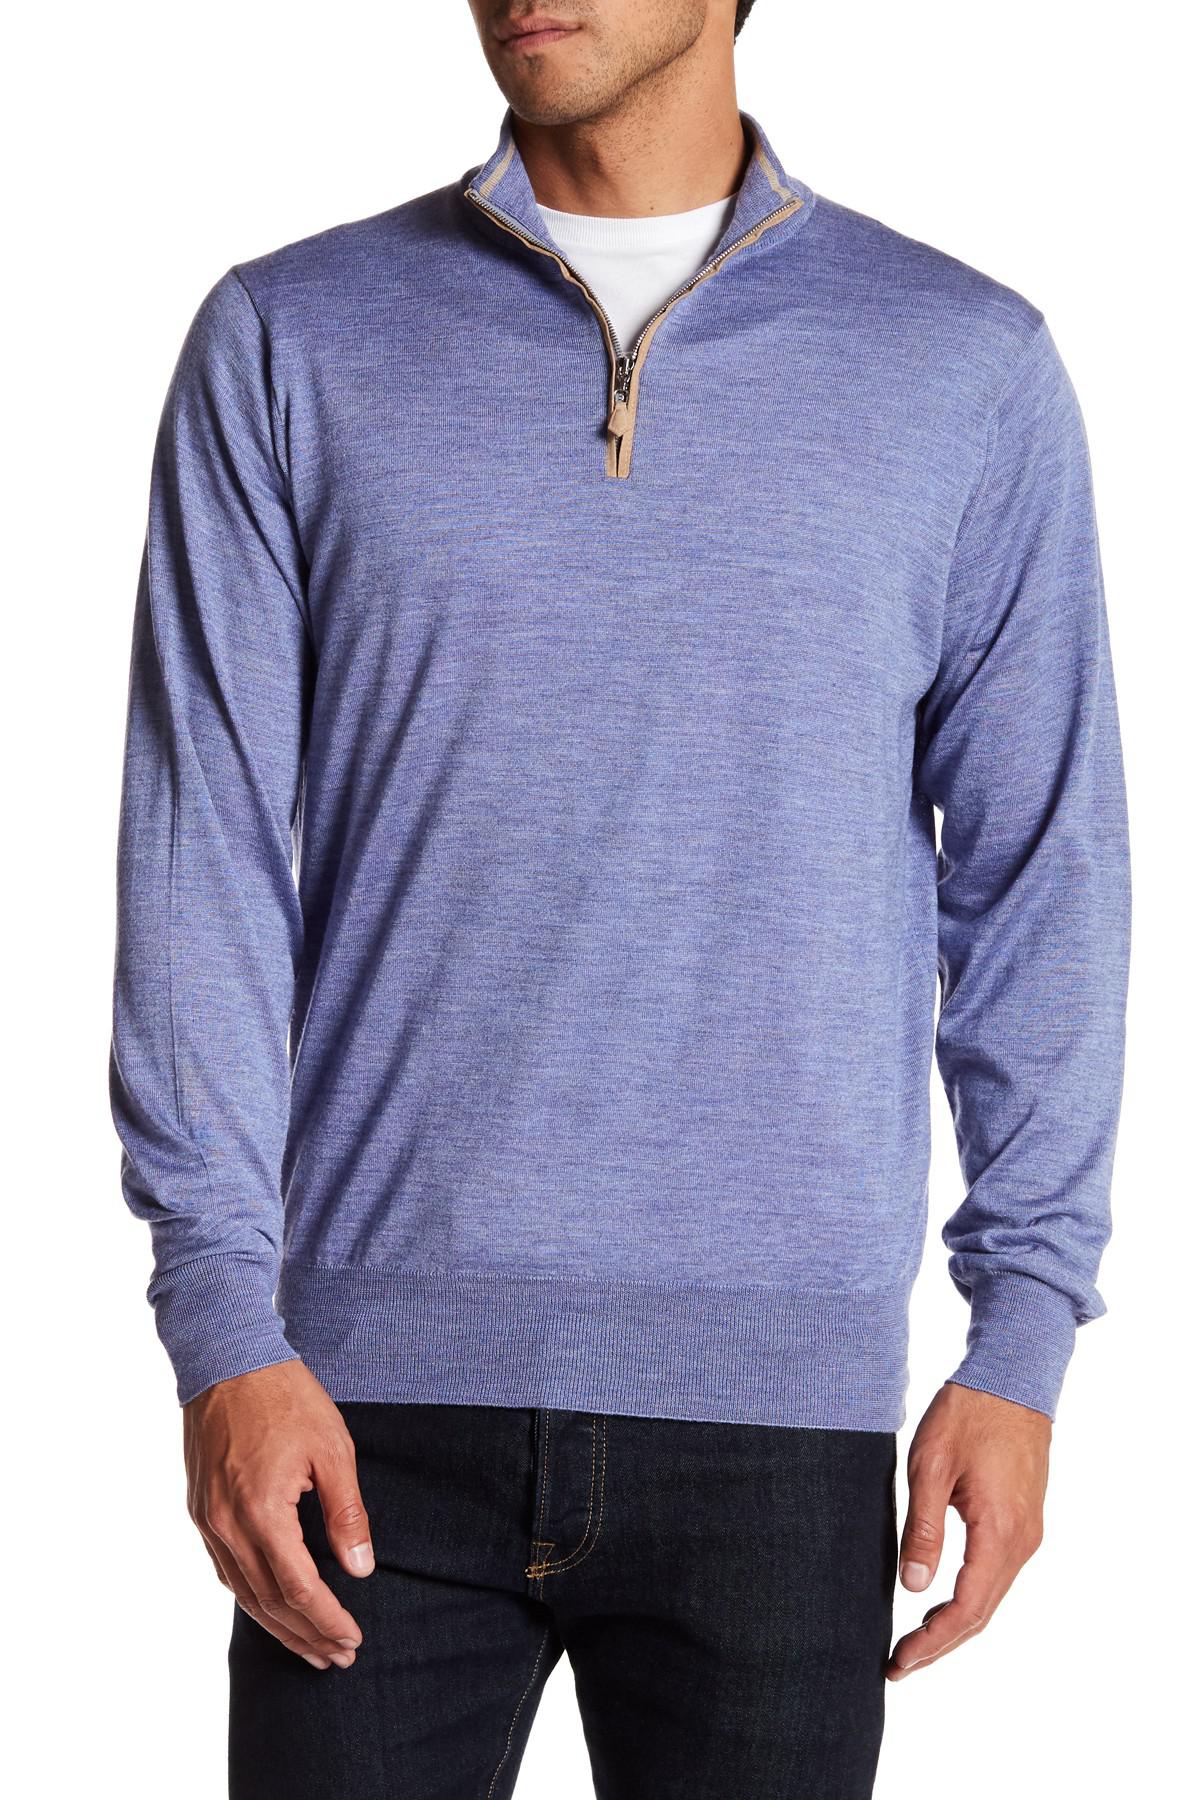 Lyst - Peter Millar Merino Silk Quarter Zip Sweater in Blue for Men